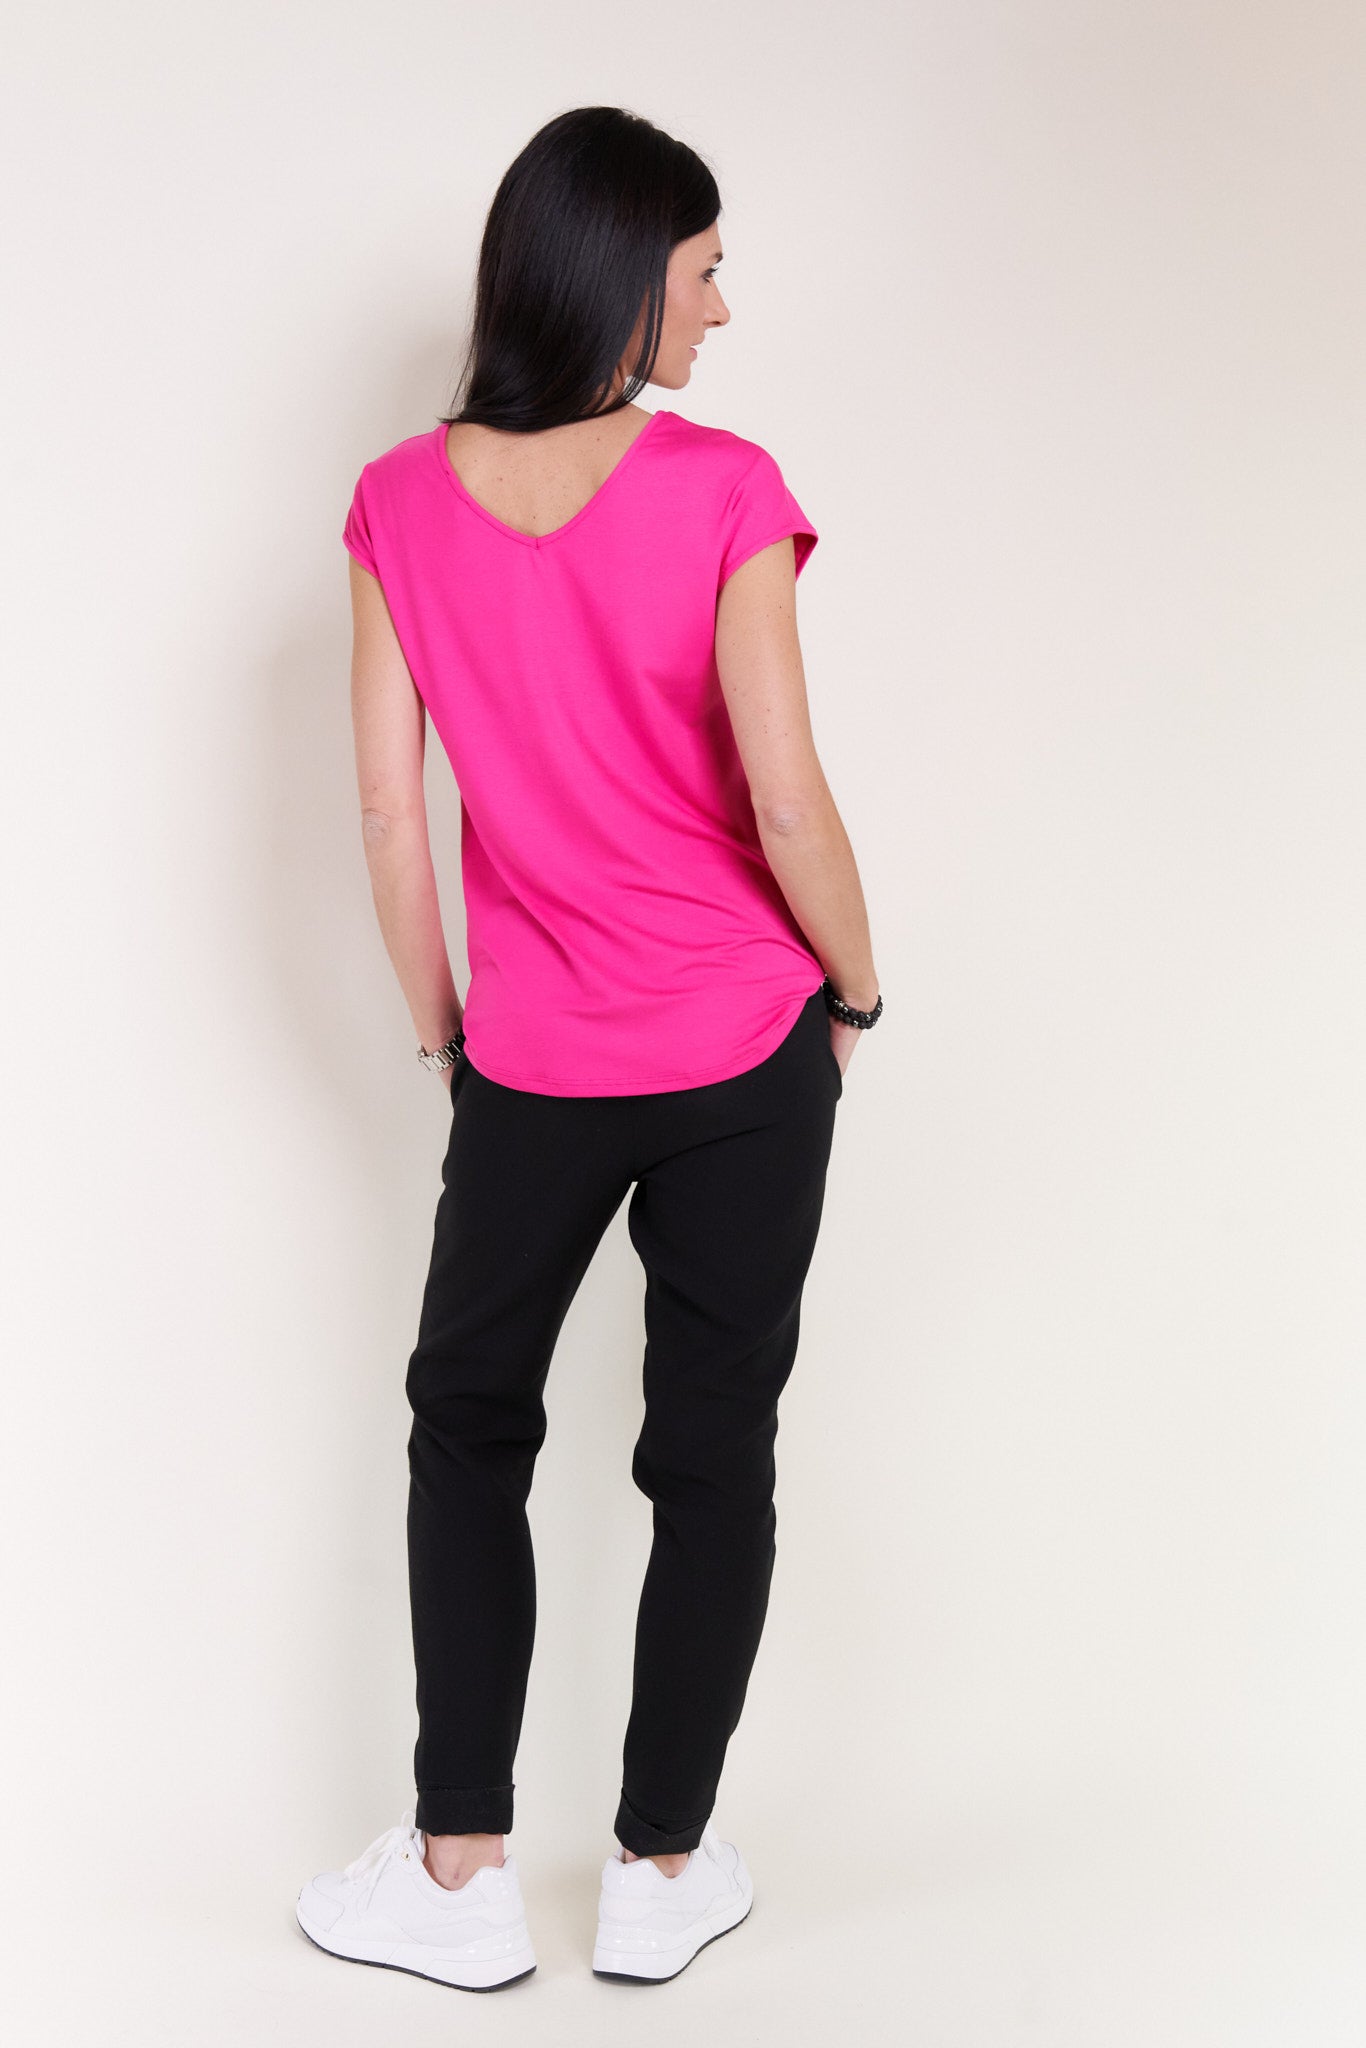 
                  
                    Seidel Basic 2-in-1 Shirt Pink
                  
                